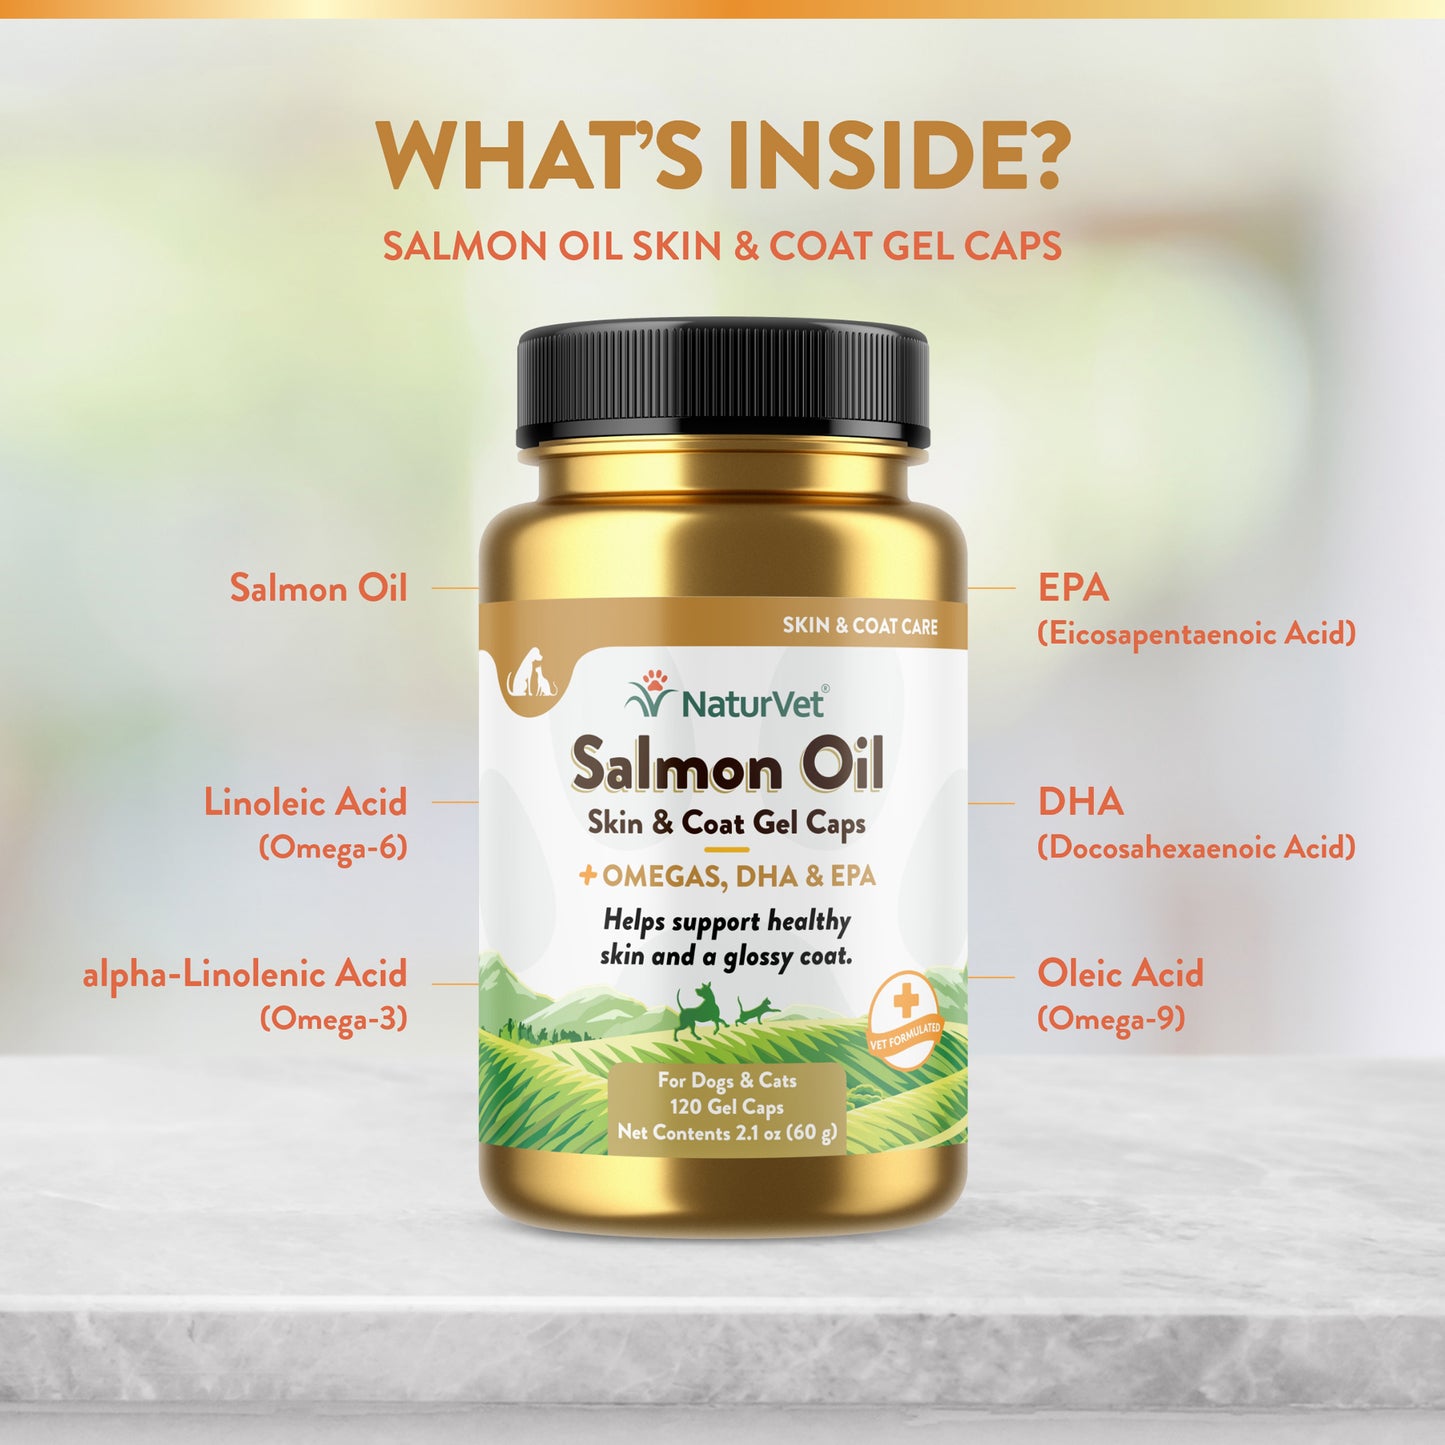 Salmon Oil Skin & Coat Gel Caps